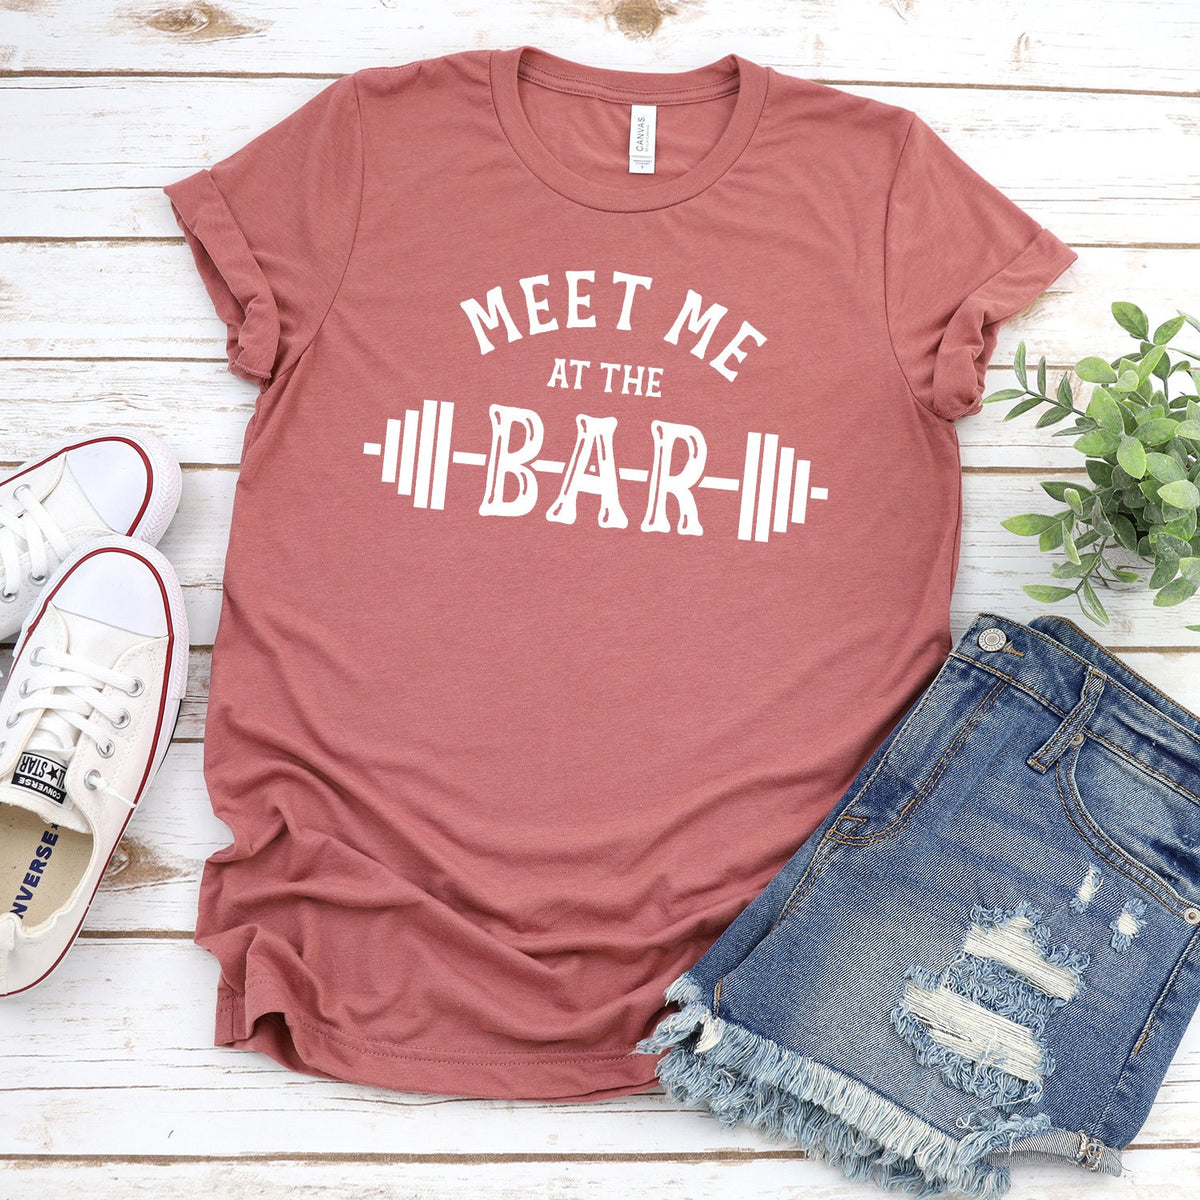 Meet Me At The Bar - Short Sleeve Tee Shirt